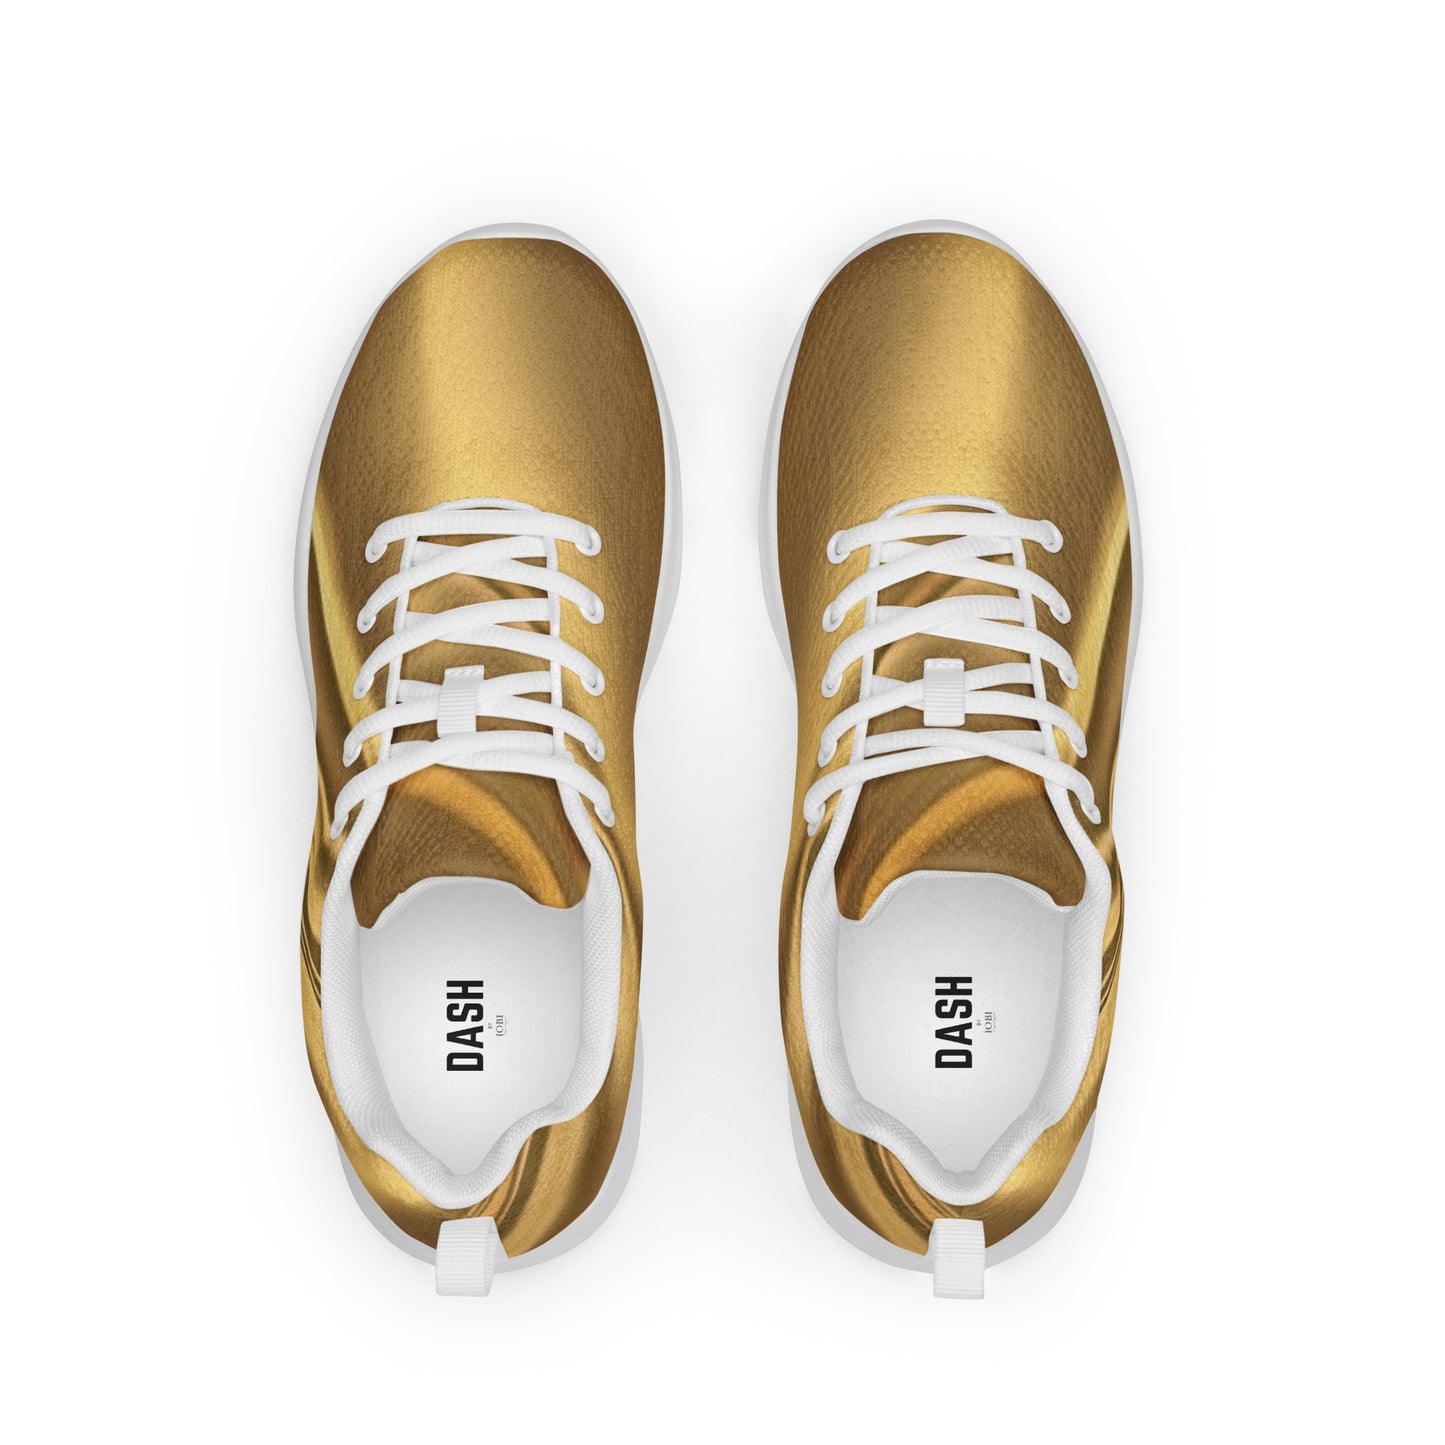 DASH Liquid Gold Men’s Athletic Shoes Lightweight Breathable Design by IOBI Original Apparel